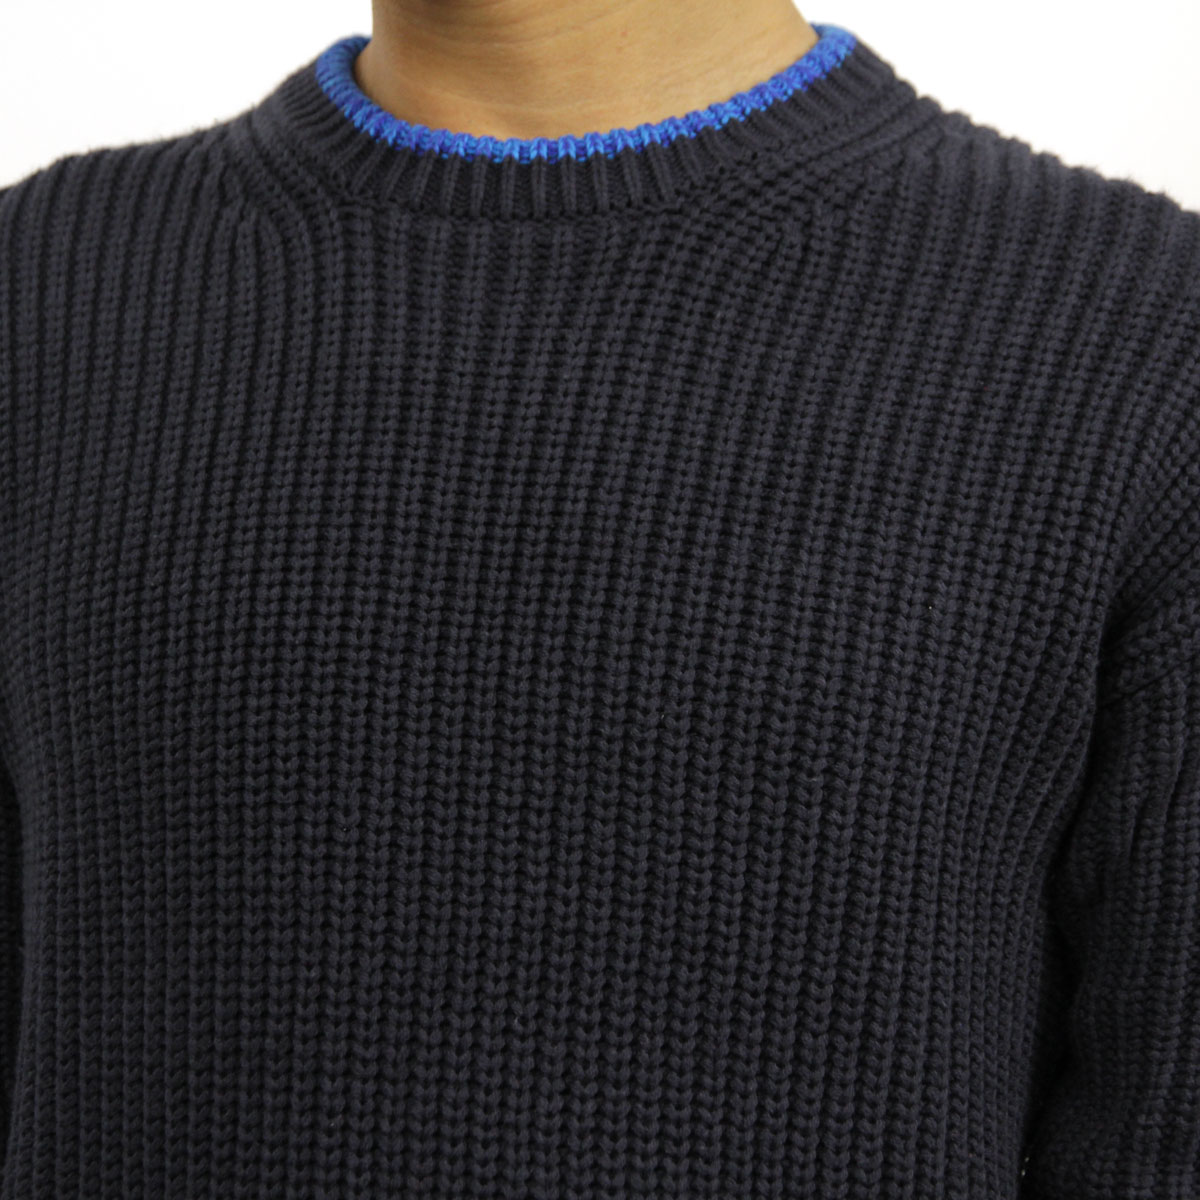 ams sweater